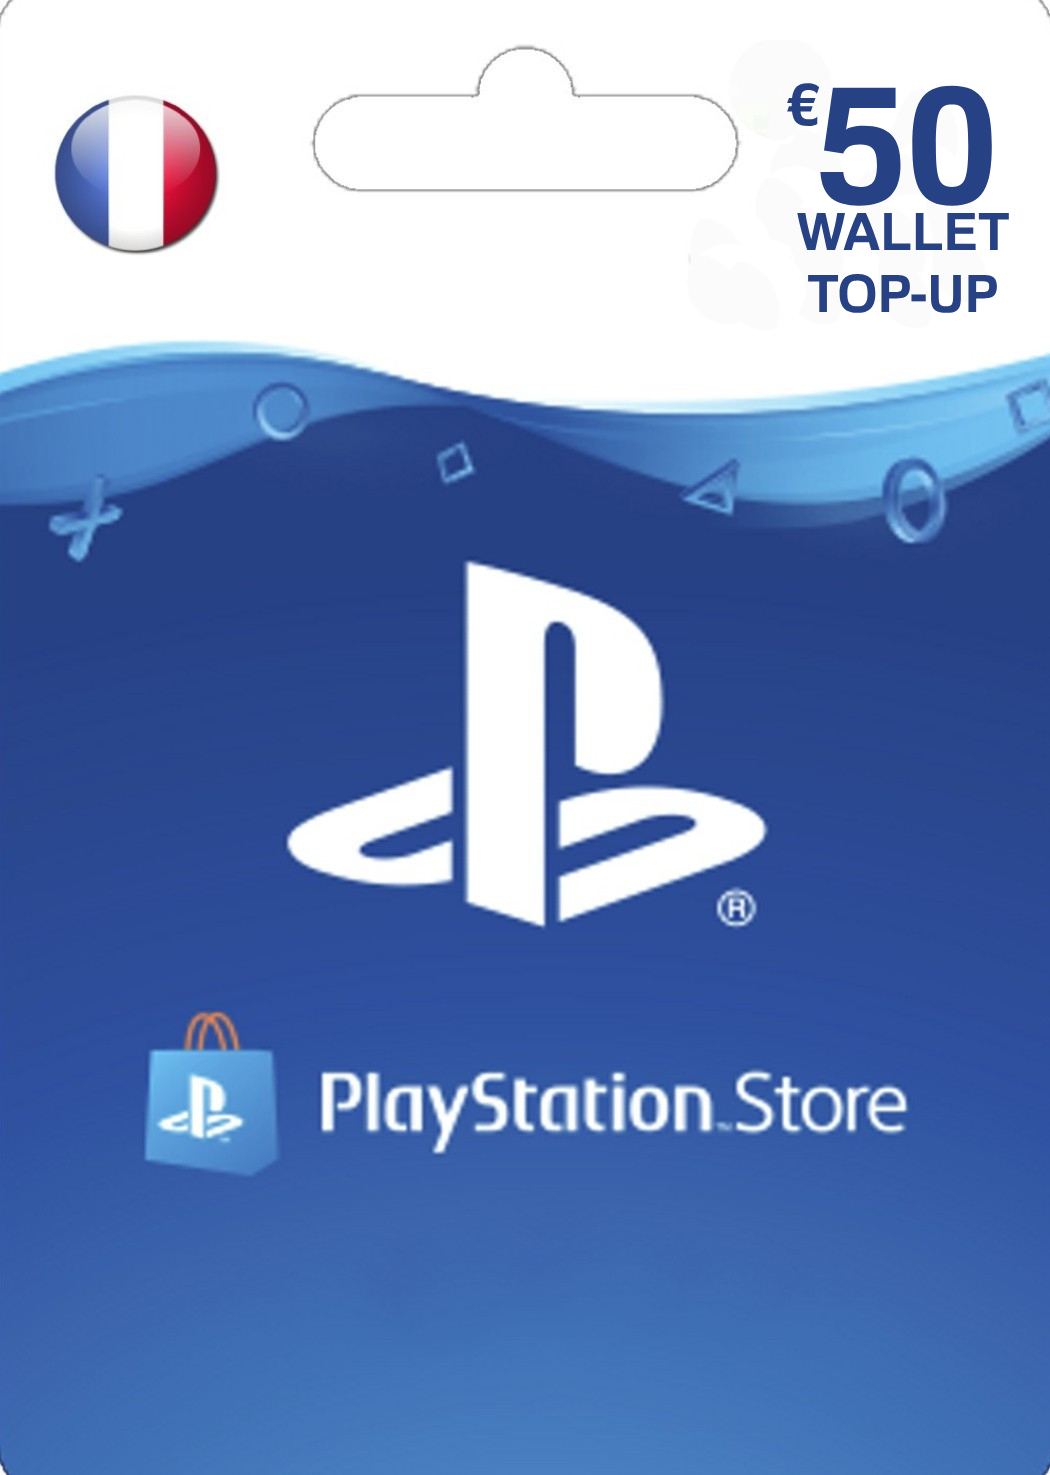 PSN Card Playstation | PS3, digital EUR for Network PS Vita, PSP, France PS4, PSP 50 PS5 Go